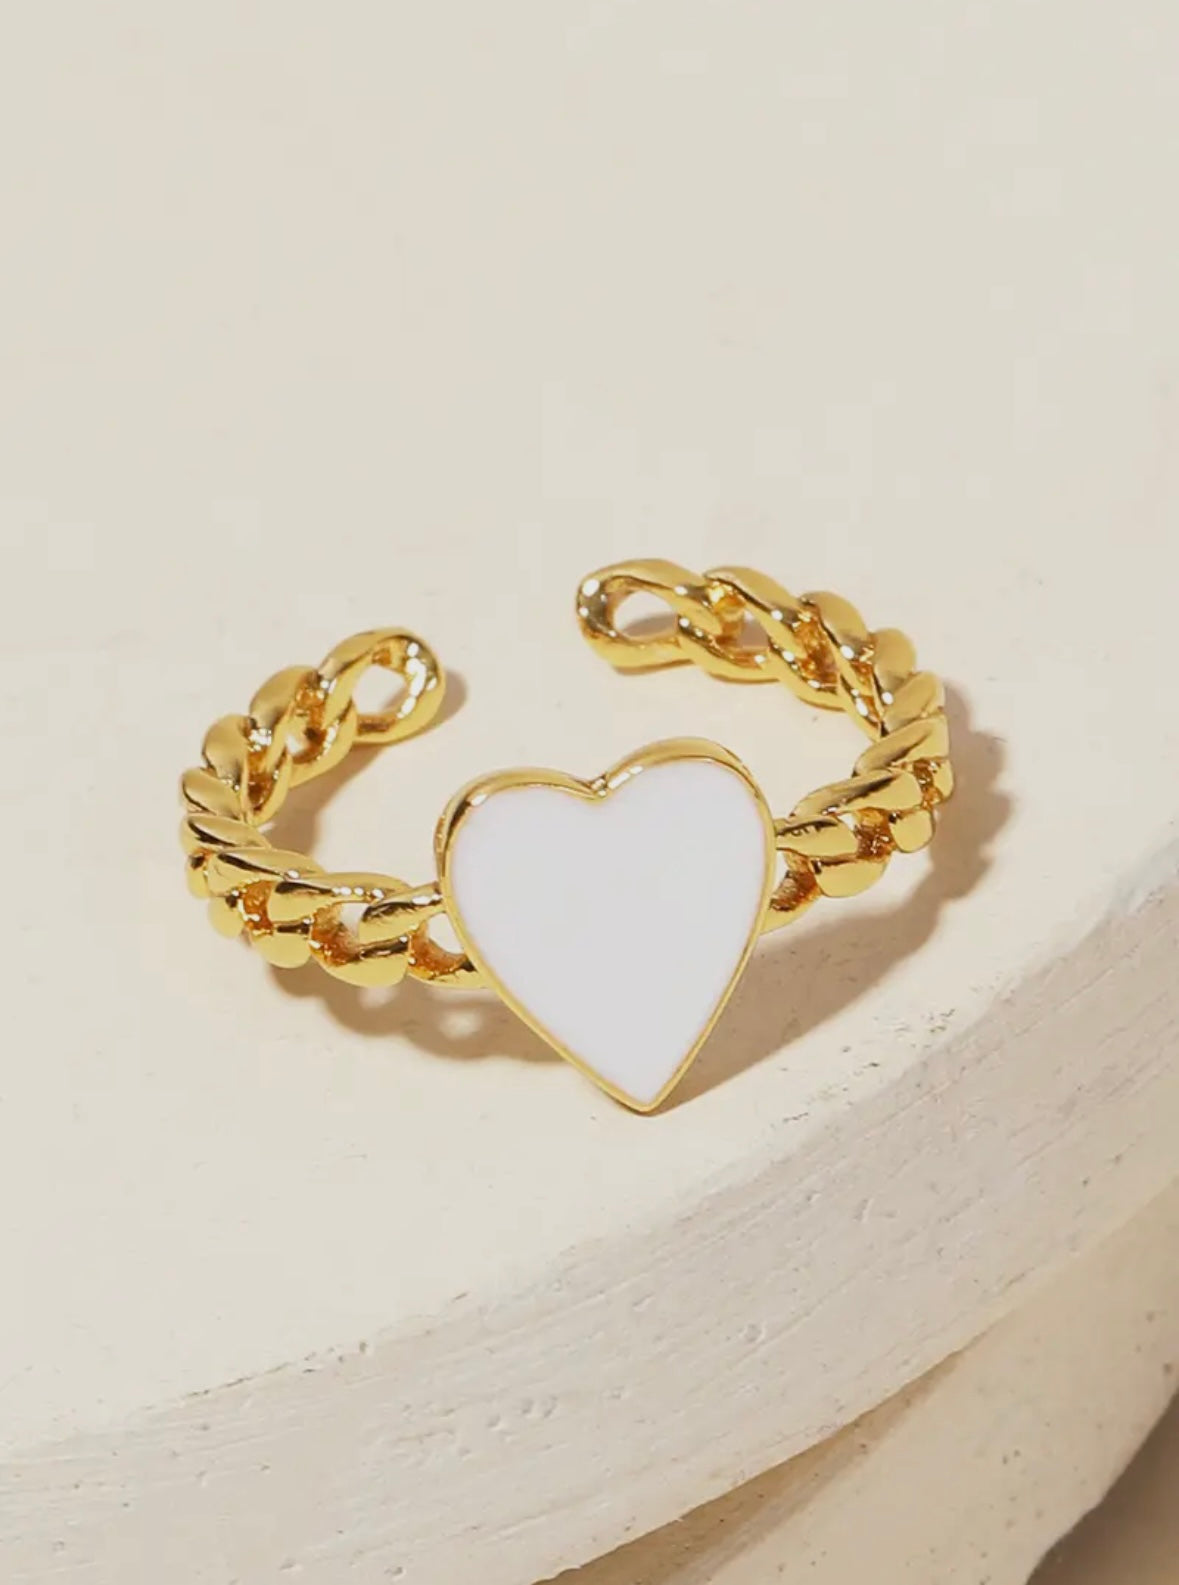 Dayri Jewelry design - Chain ring • • • • • #jewellery #jewelry